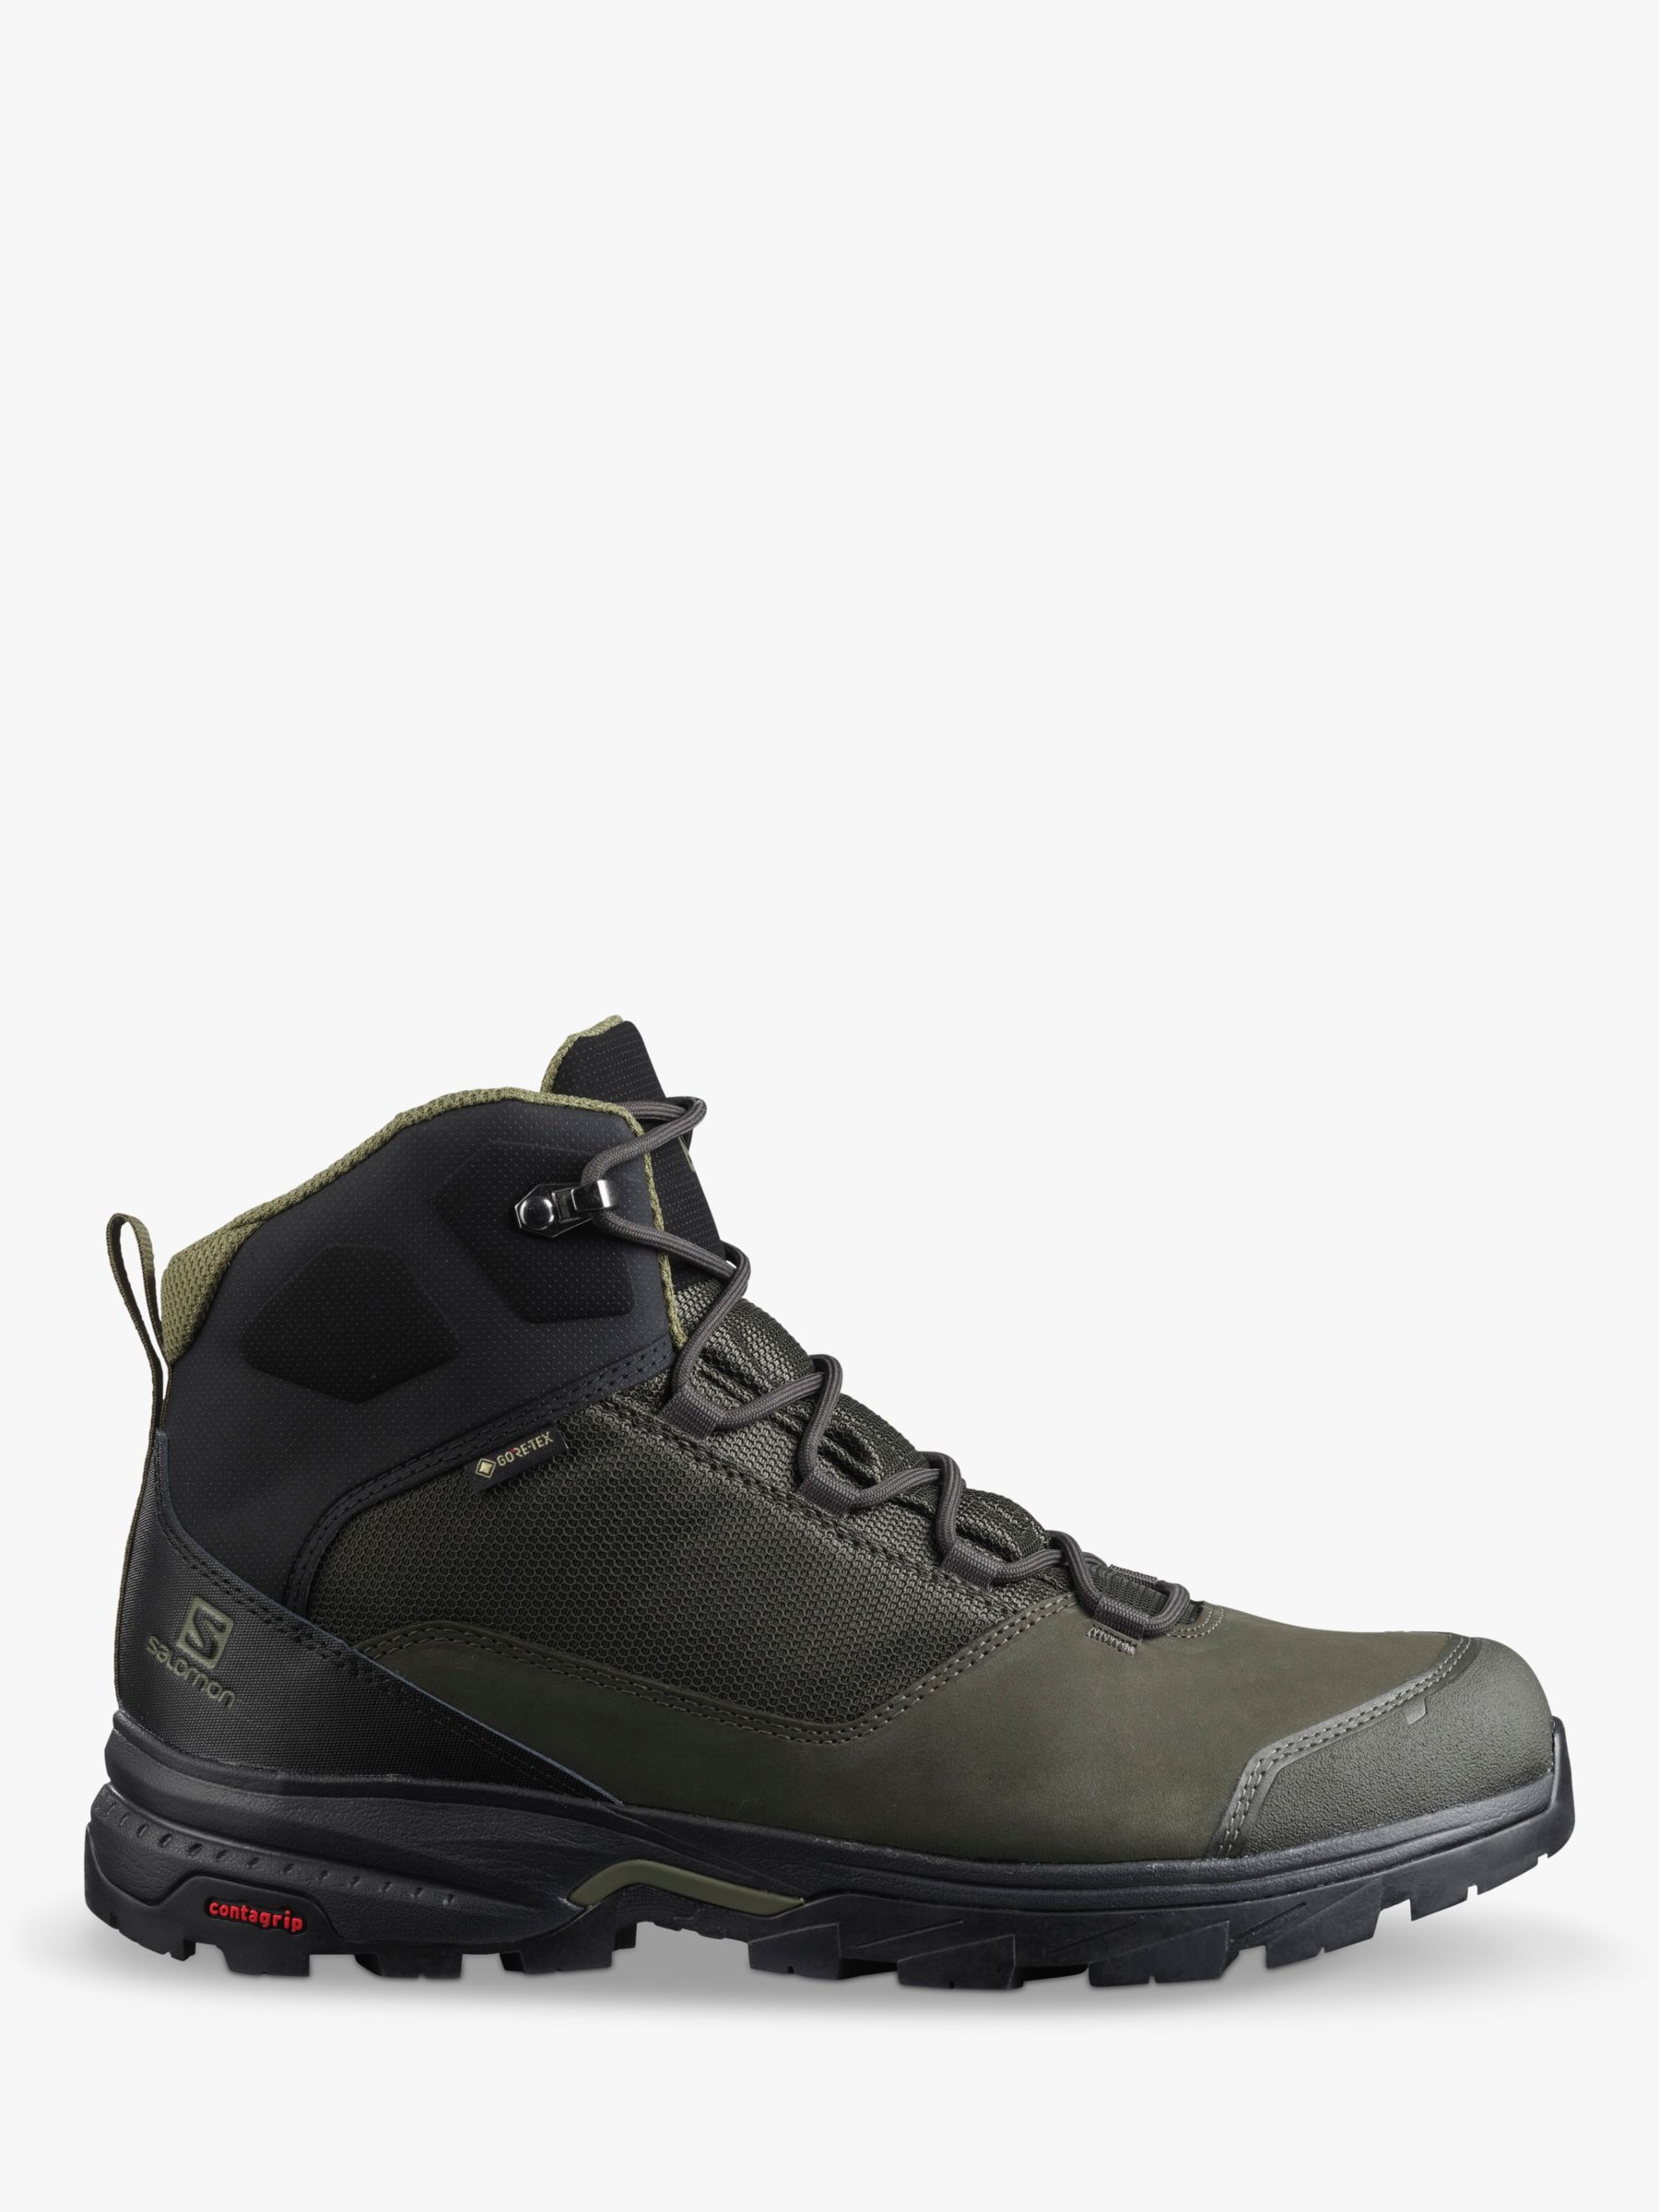 Salomon OUTward Men's Waterproof Gore-Tex Hiking Boots